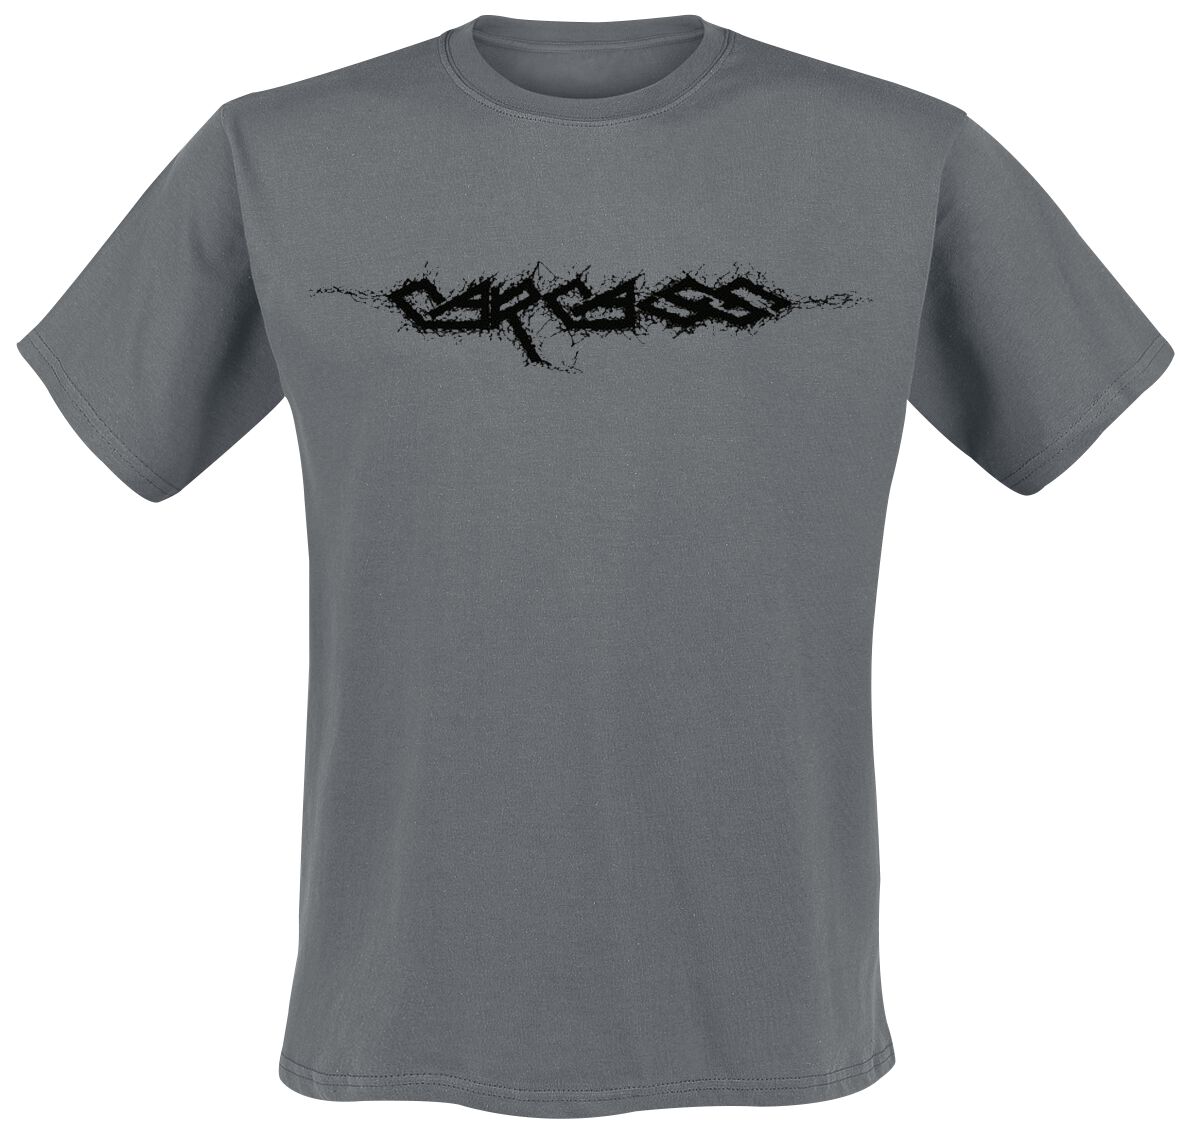 Carcass T-Shirt - Logo - M bis XXL - für Männer - Größe XXL - charcoal  - Lizenziertes Merchandise!